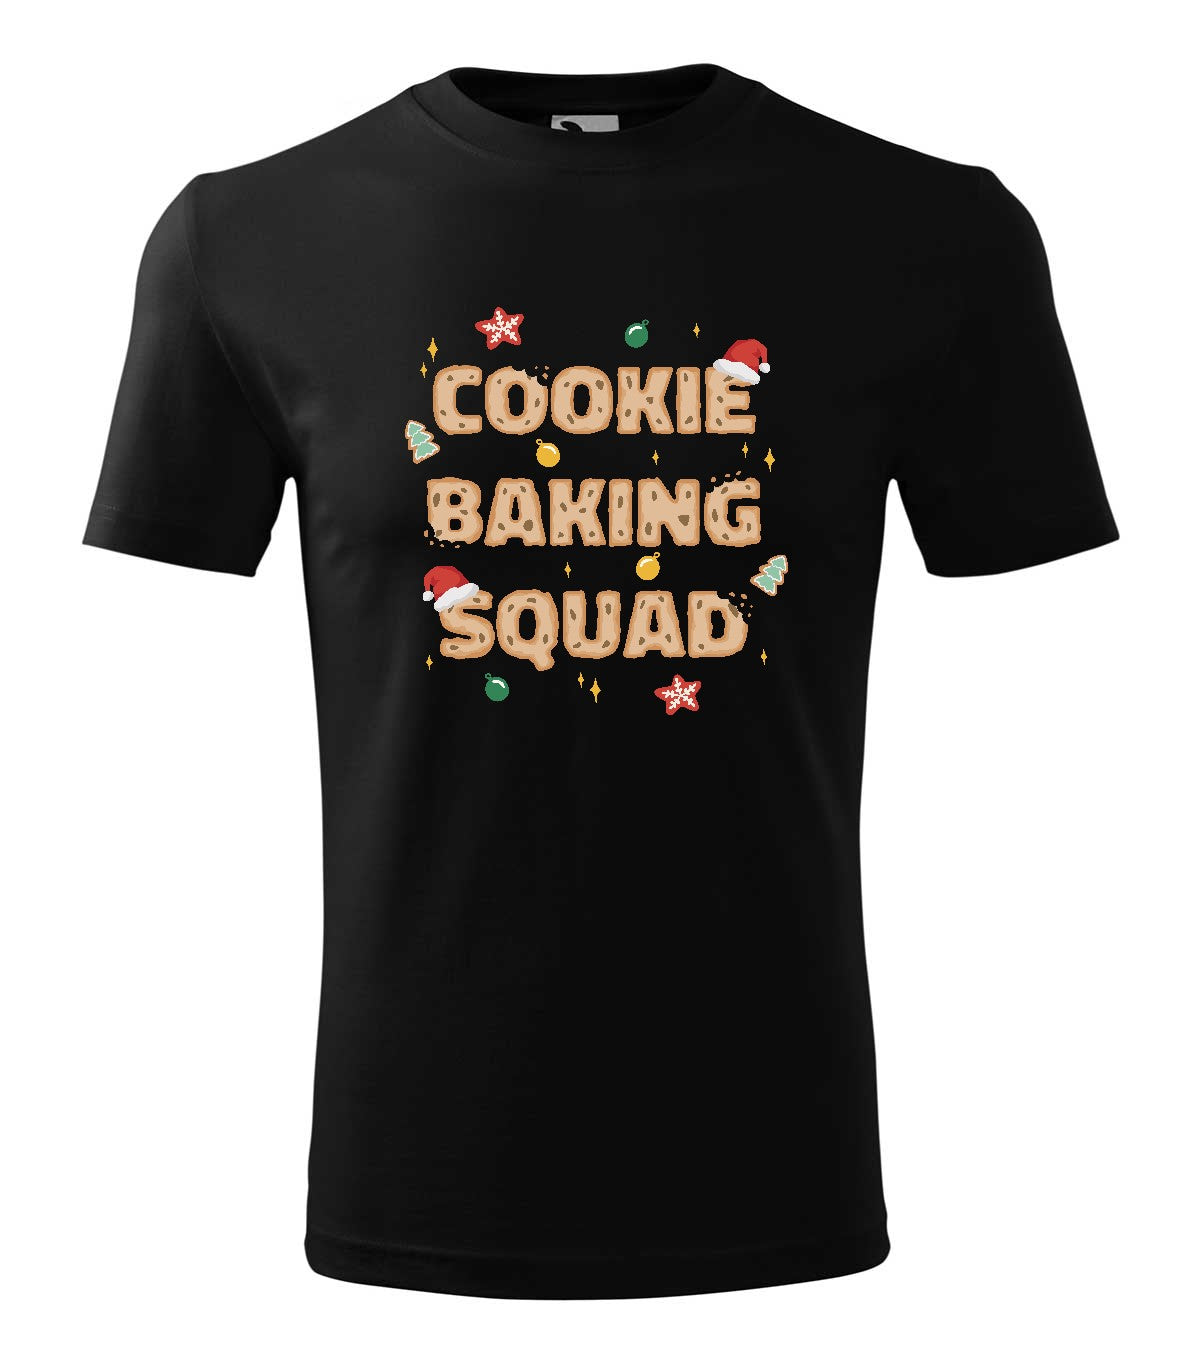 Cookie Baking Squad férfi technikai póló